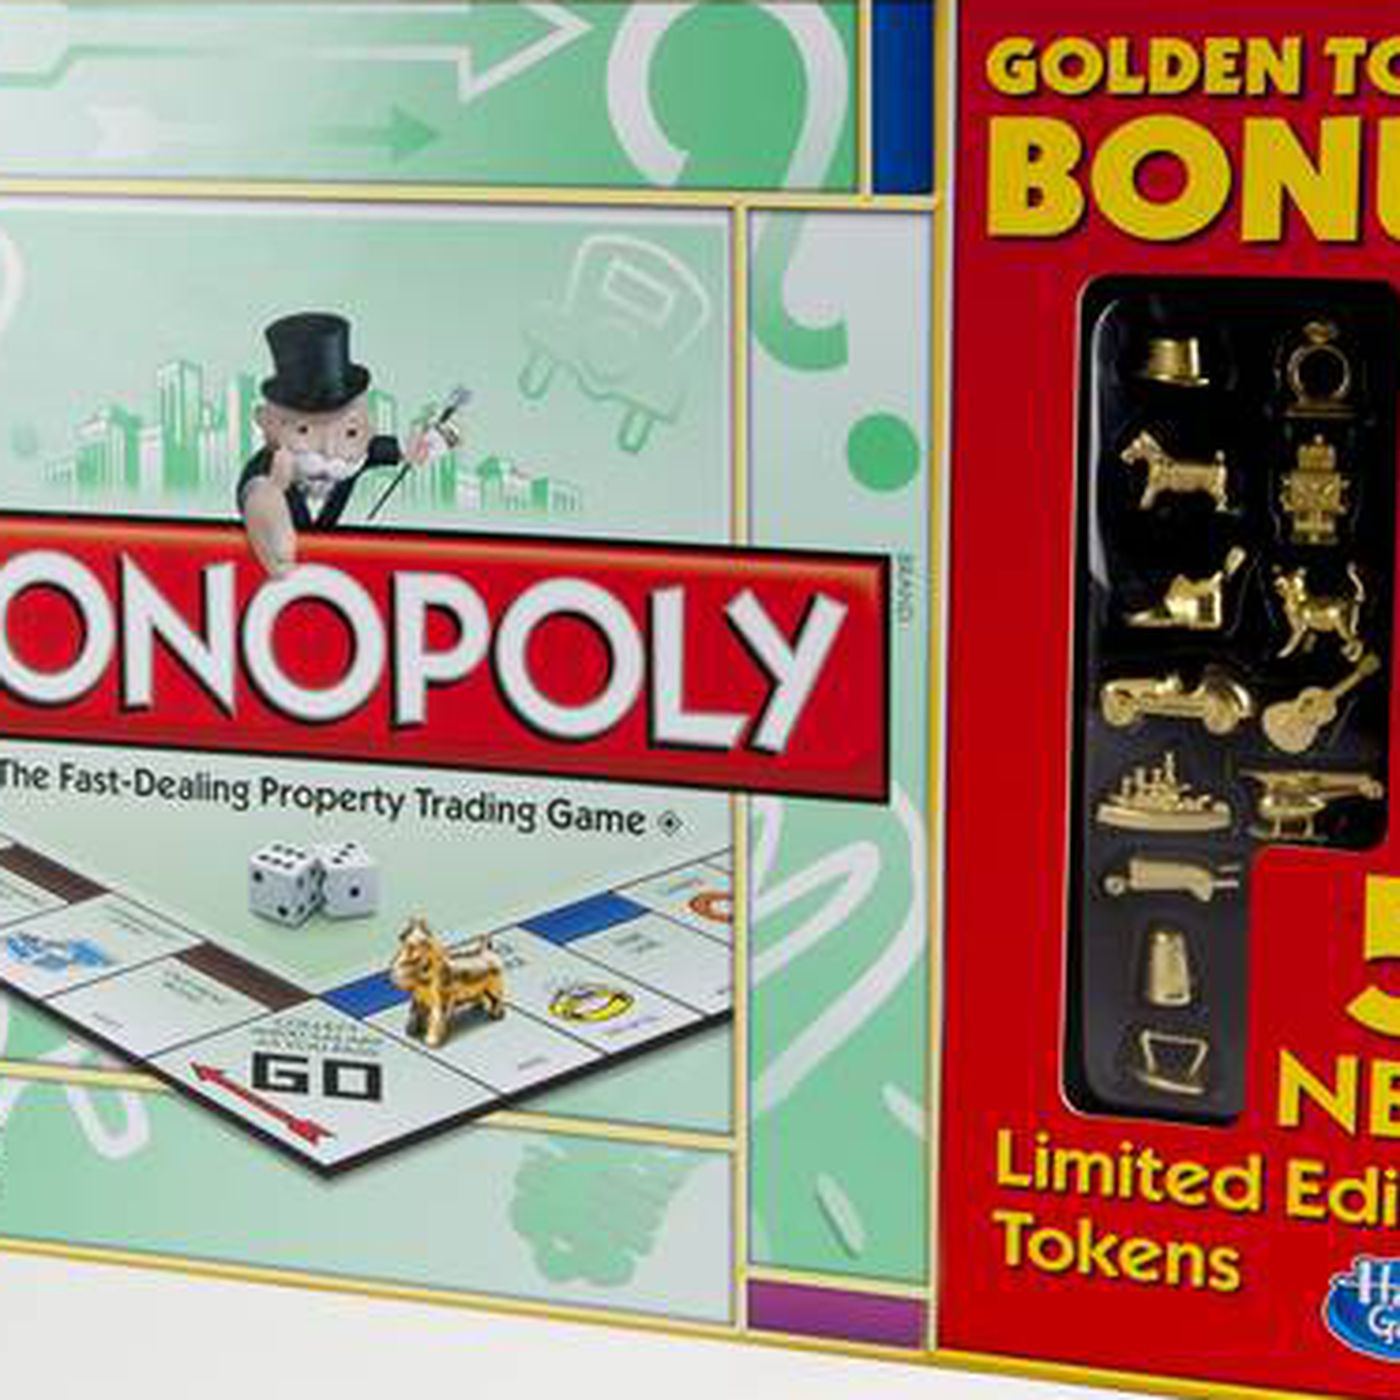 U Choose Tokens Die Cards Houses Spongebob Monopoly Replacement Game Pieces 